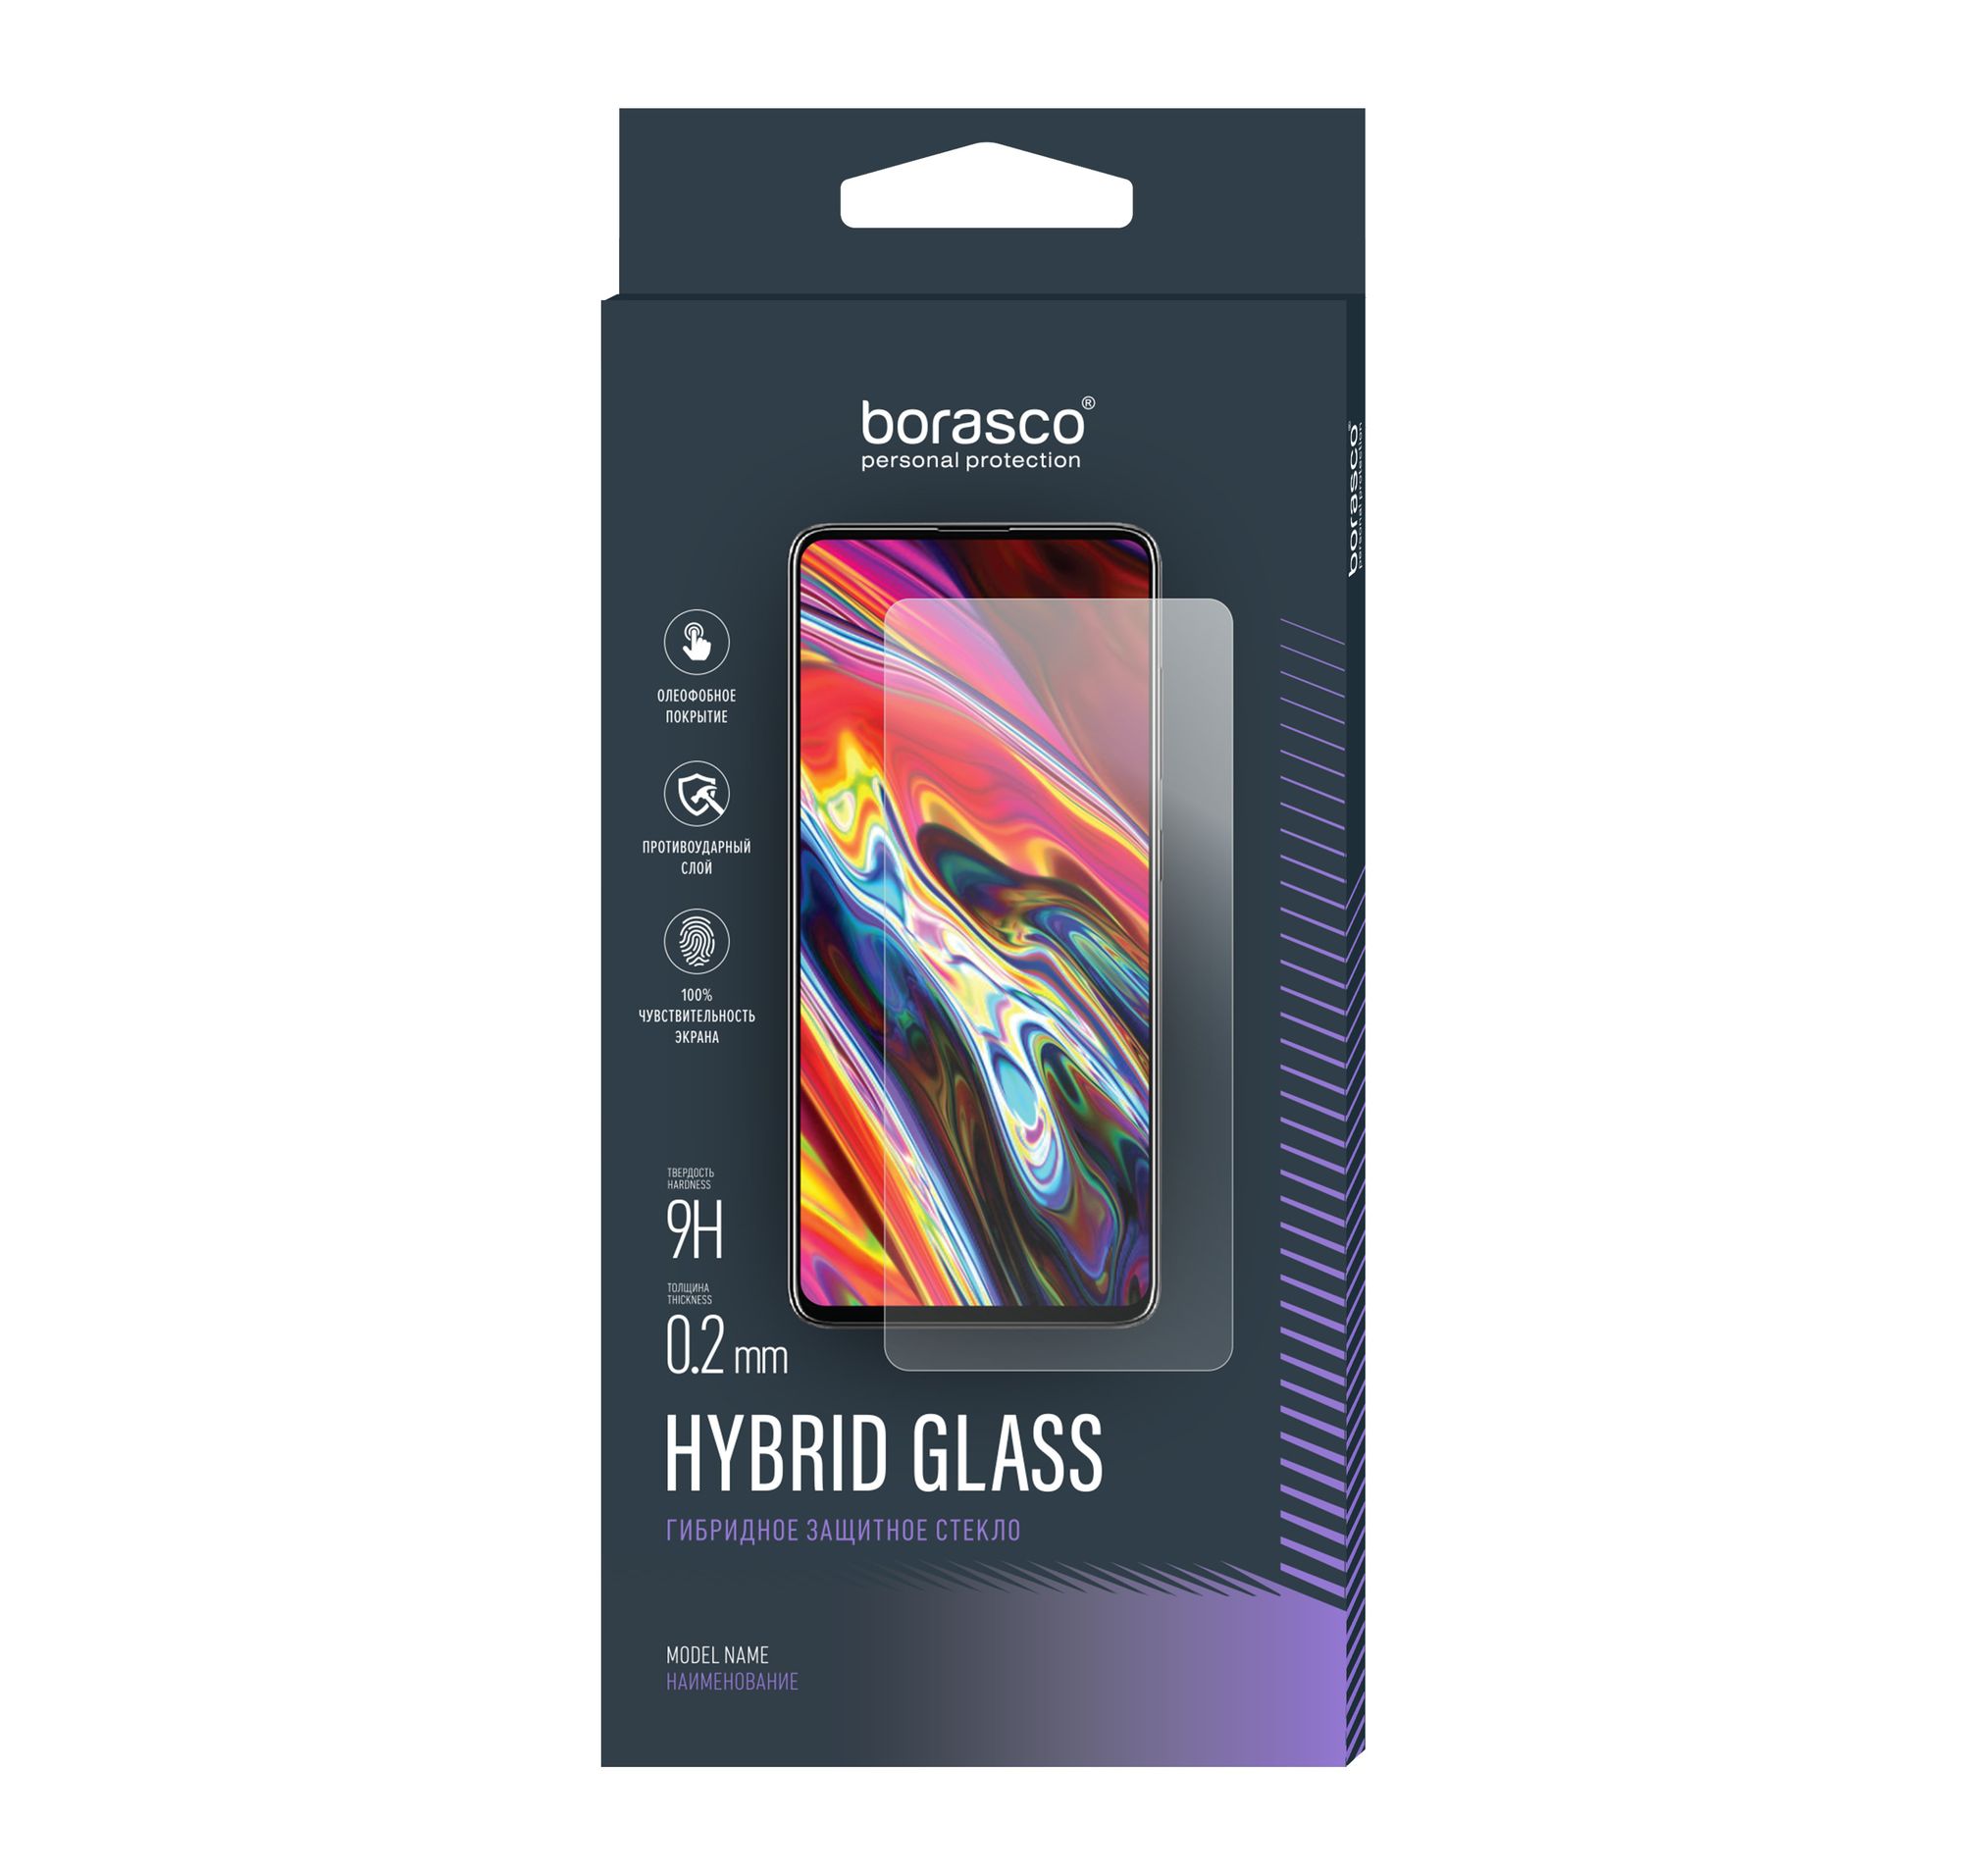 Стекло защитное Hybrid Glass VSP 0,26 мм для Sony Xperia X Performance/ X Performance dual акб lip1624erpc для sony xperia x performance f8131 x performance dual f8132